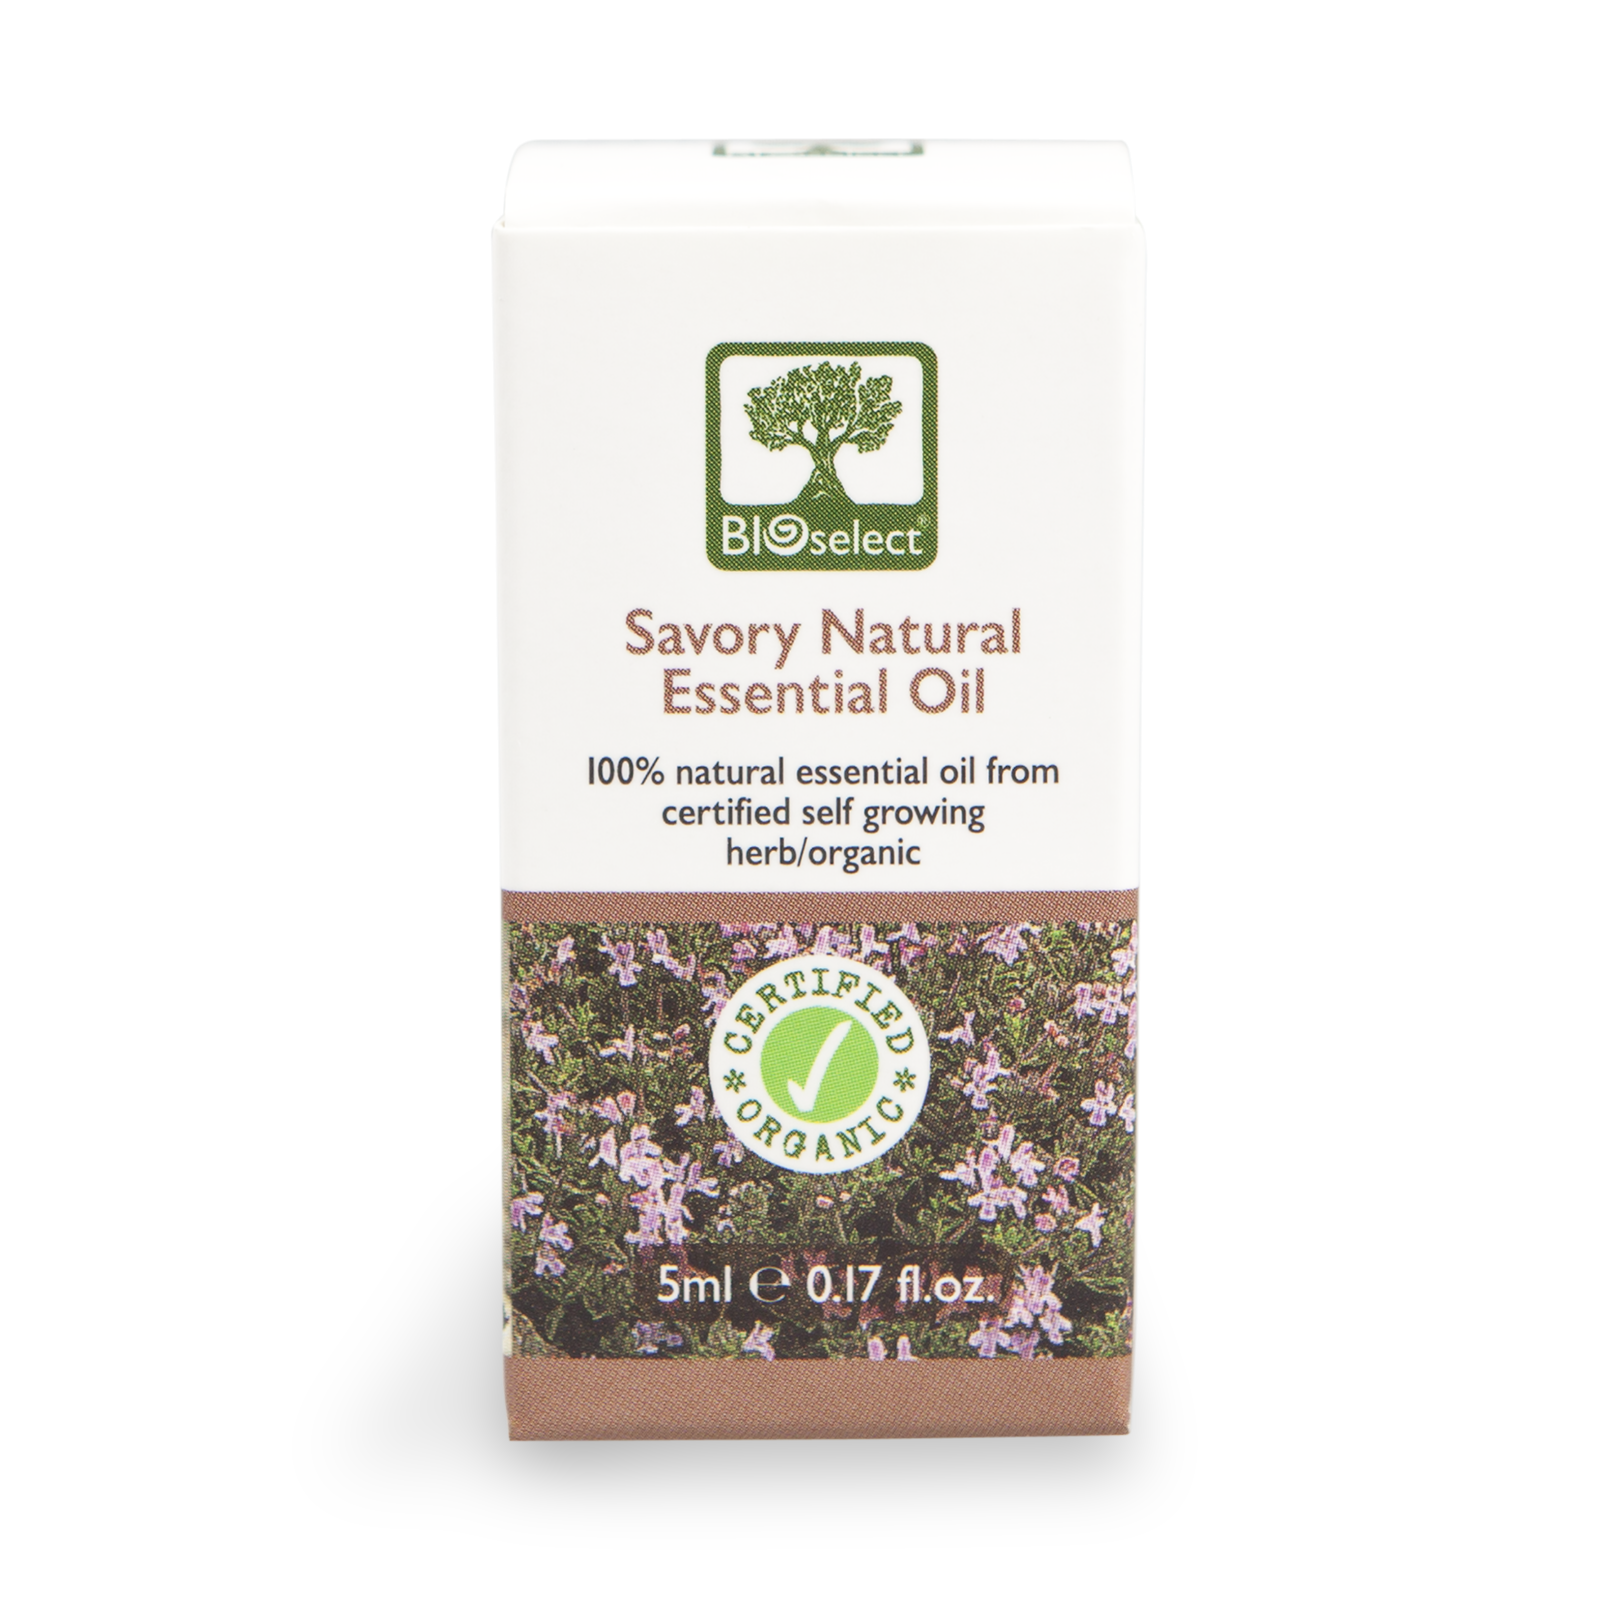 Bioselect Savory Natural Essential Oil Certified Organic